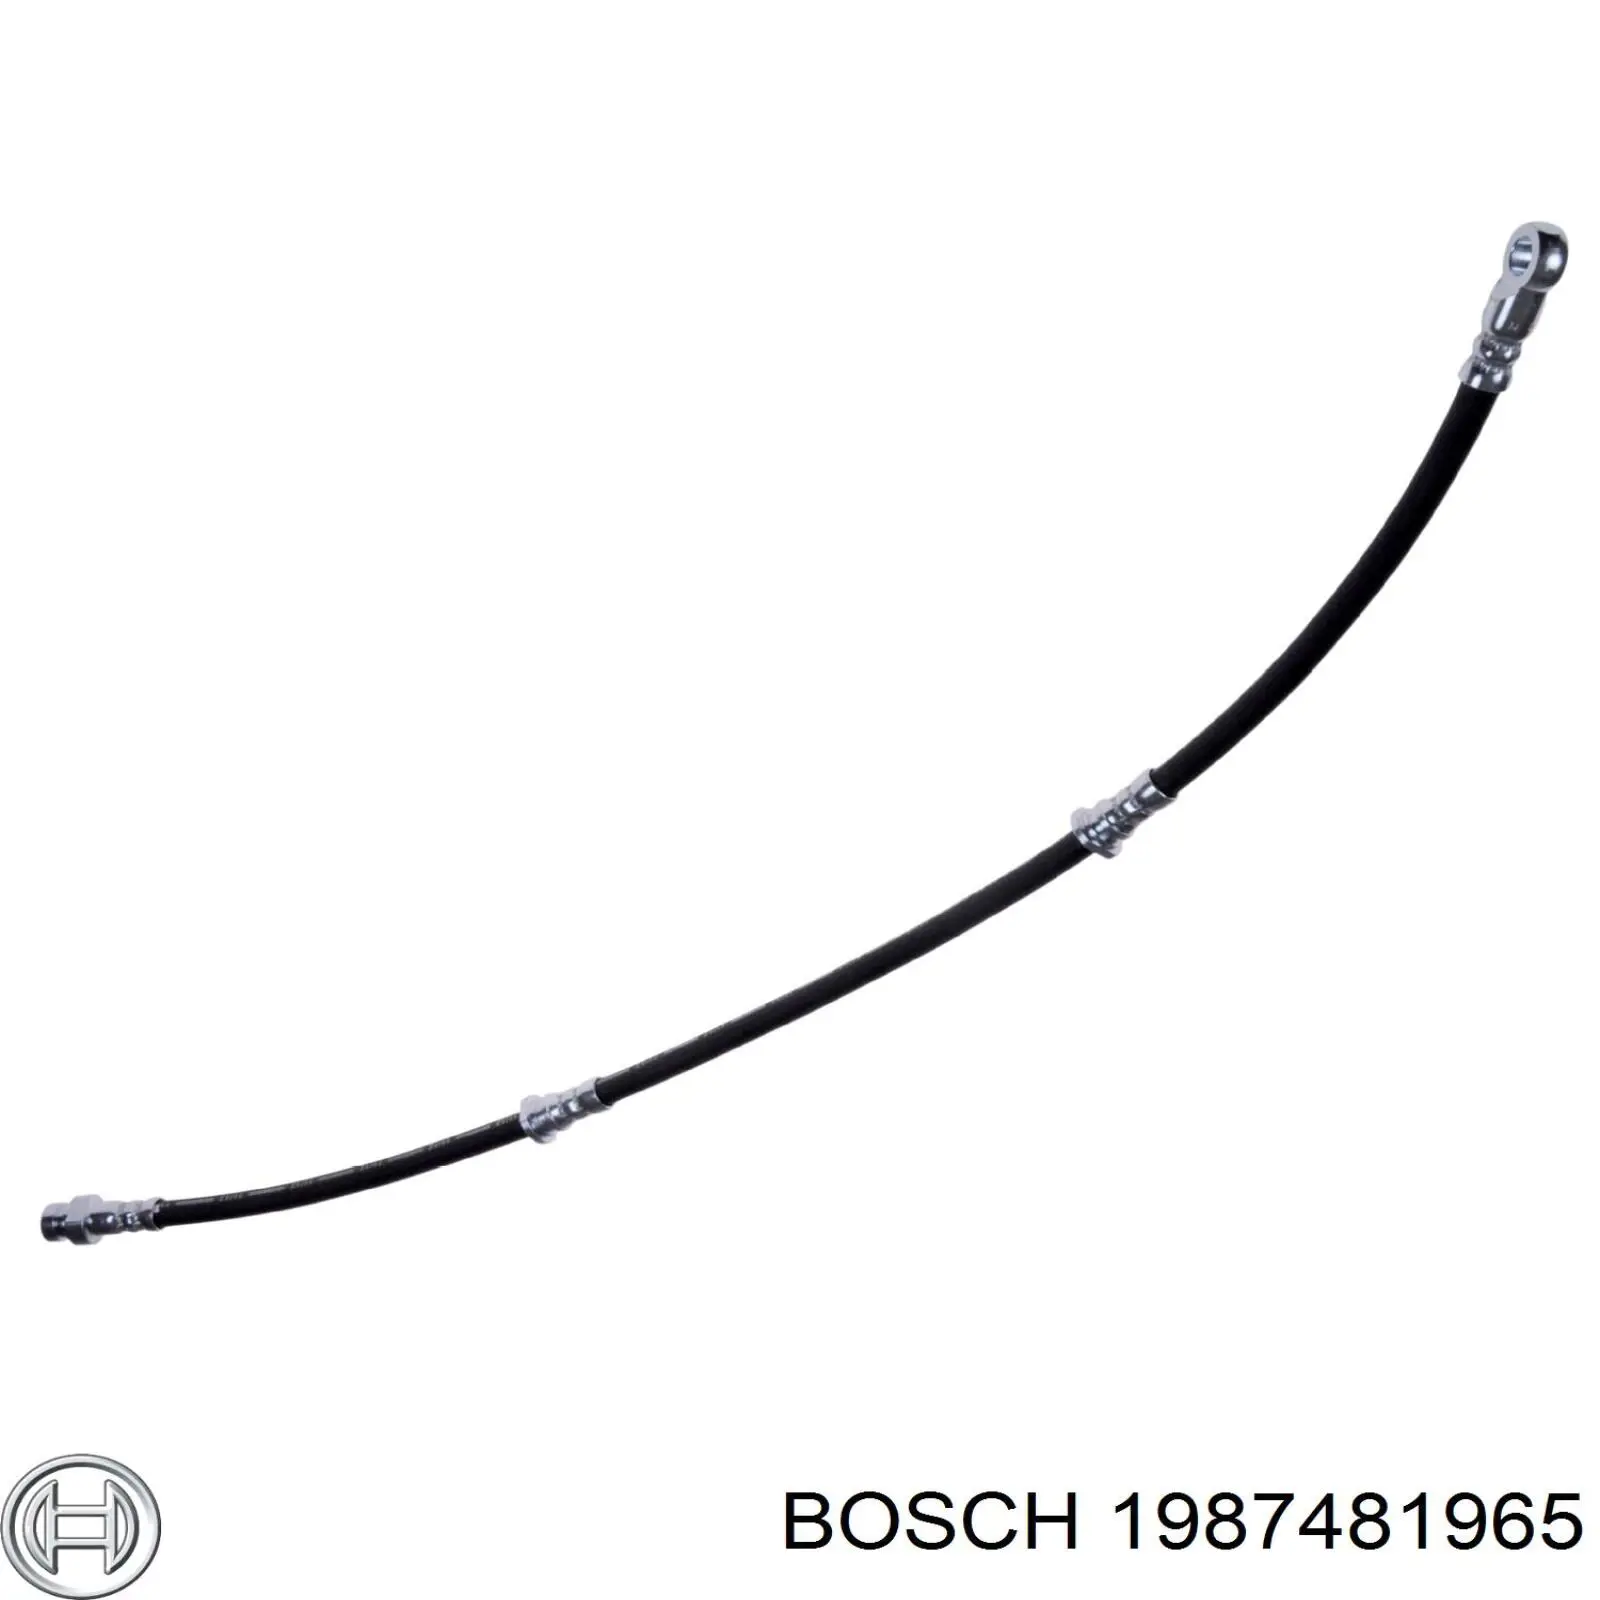 1987481965 Bosch latiguillo de freno delantero